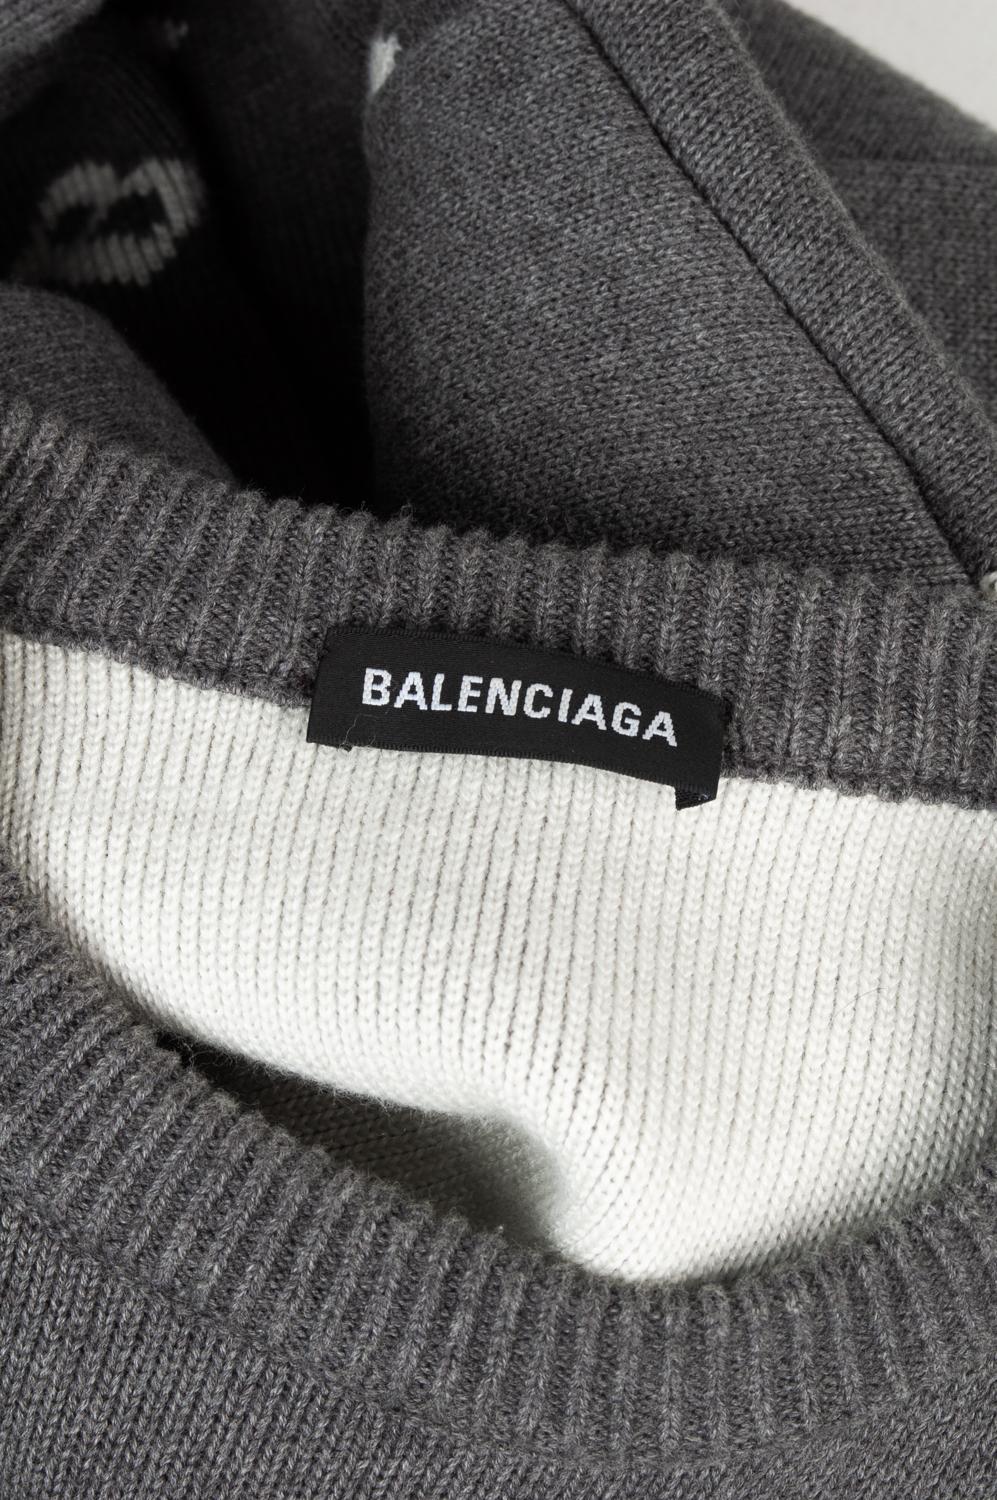 Balenciaga Crew Neck Logo Men Sweater Size M, S628 In Excellent Condition For Sale In Kaunas, LT